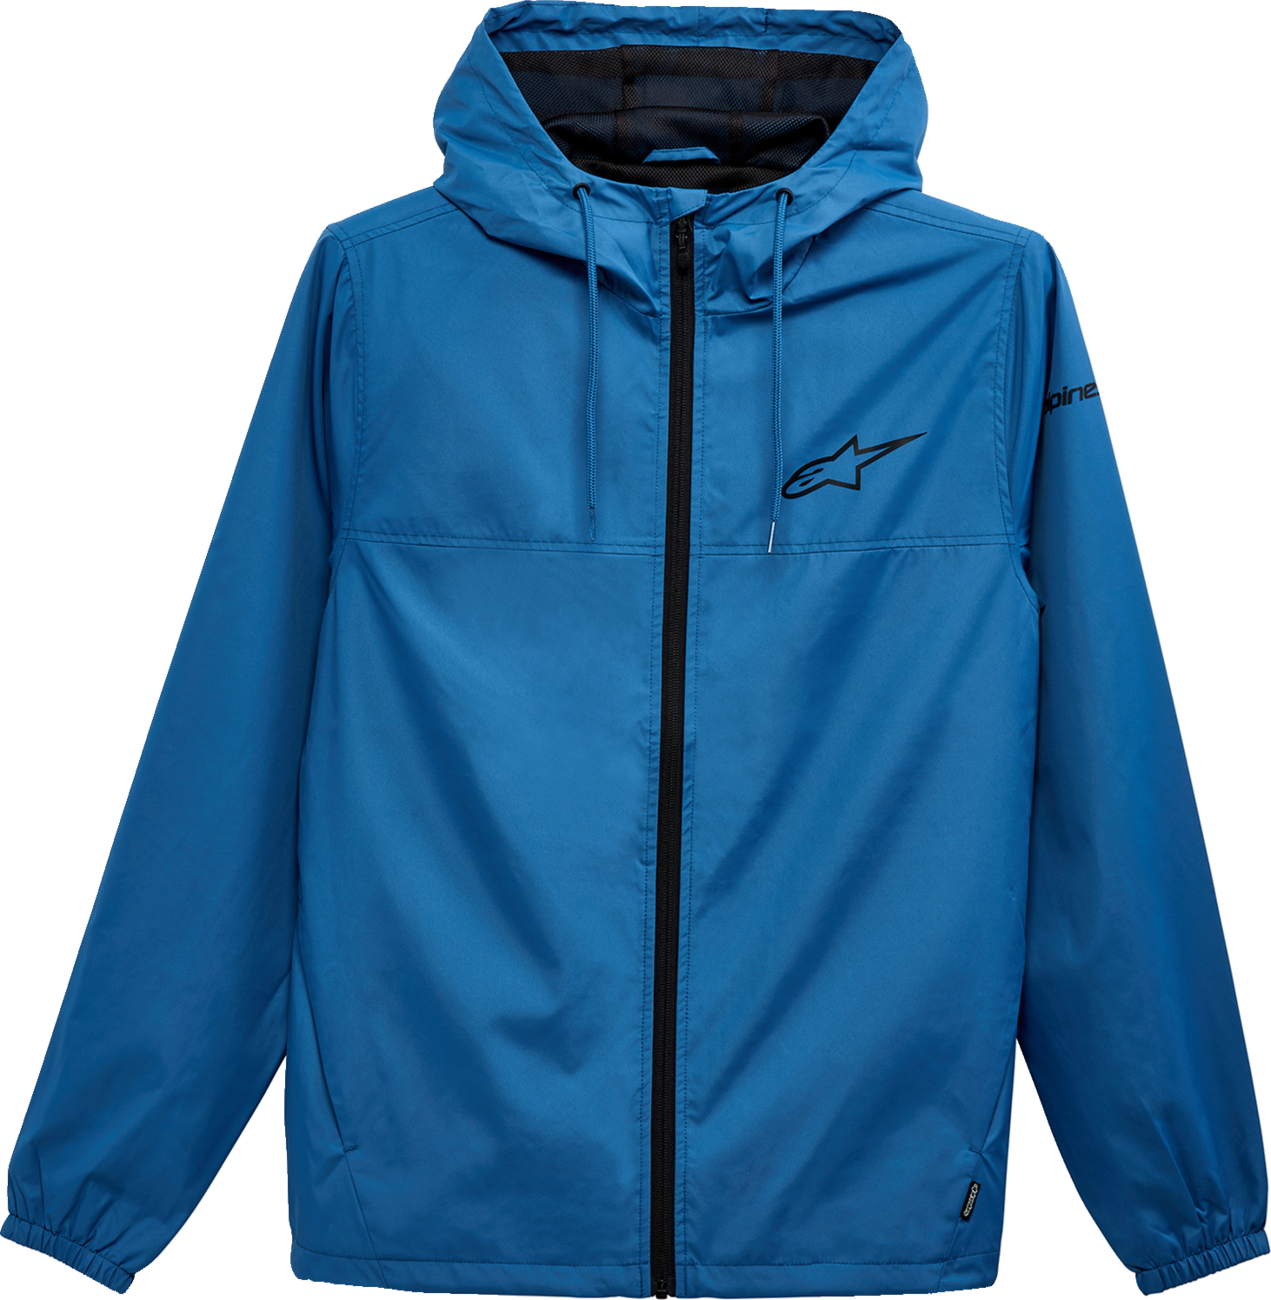 ALPINESTARS Treq Jacket - Blue - Medium 1232-11020-72-M